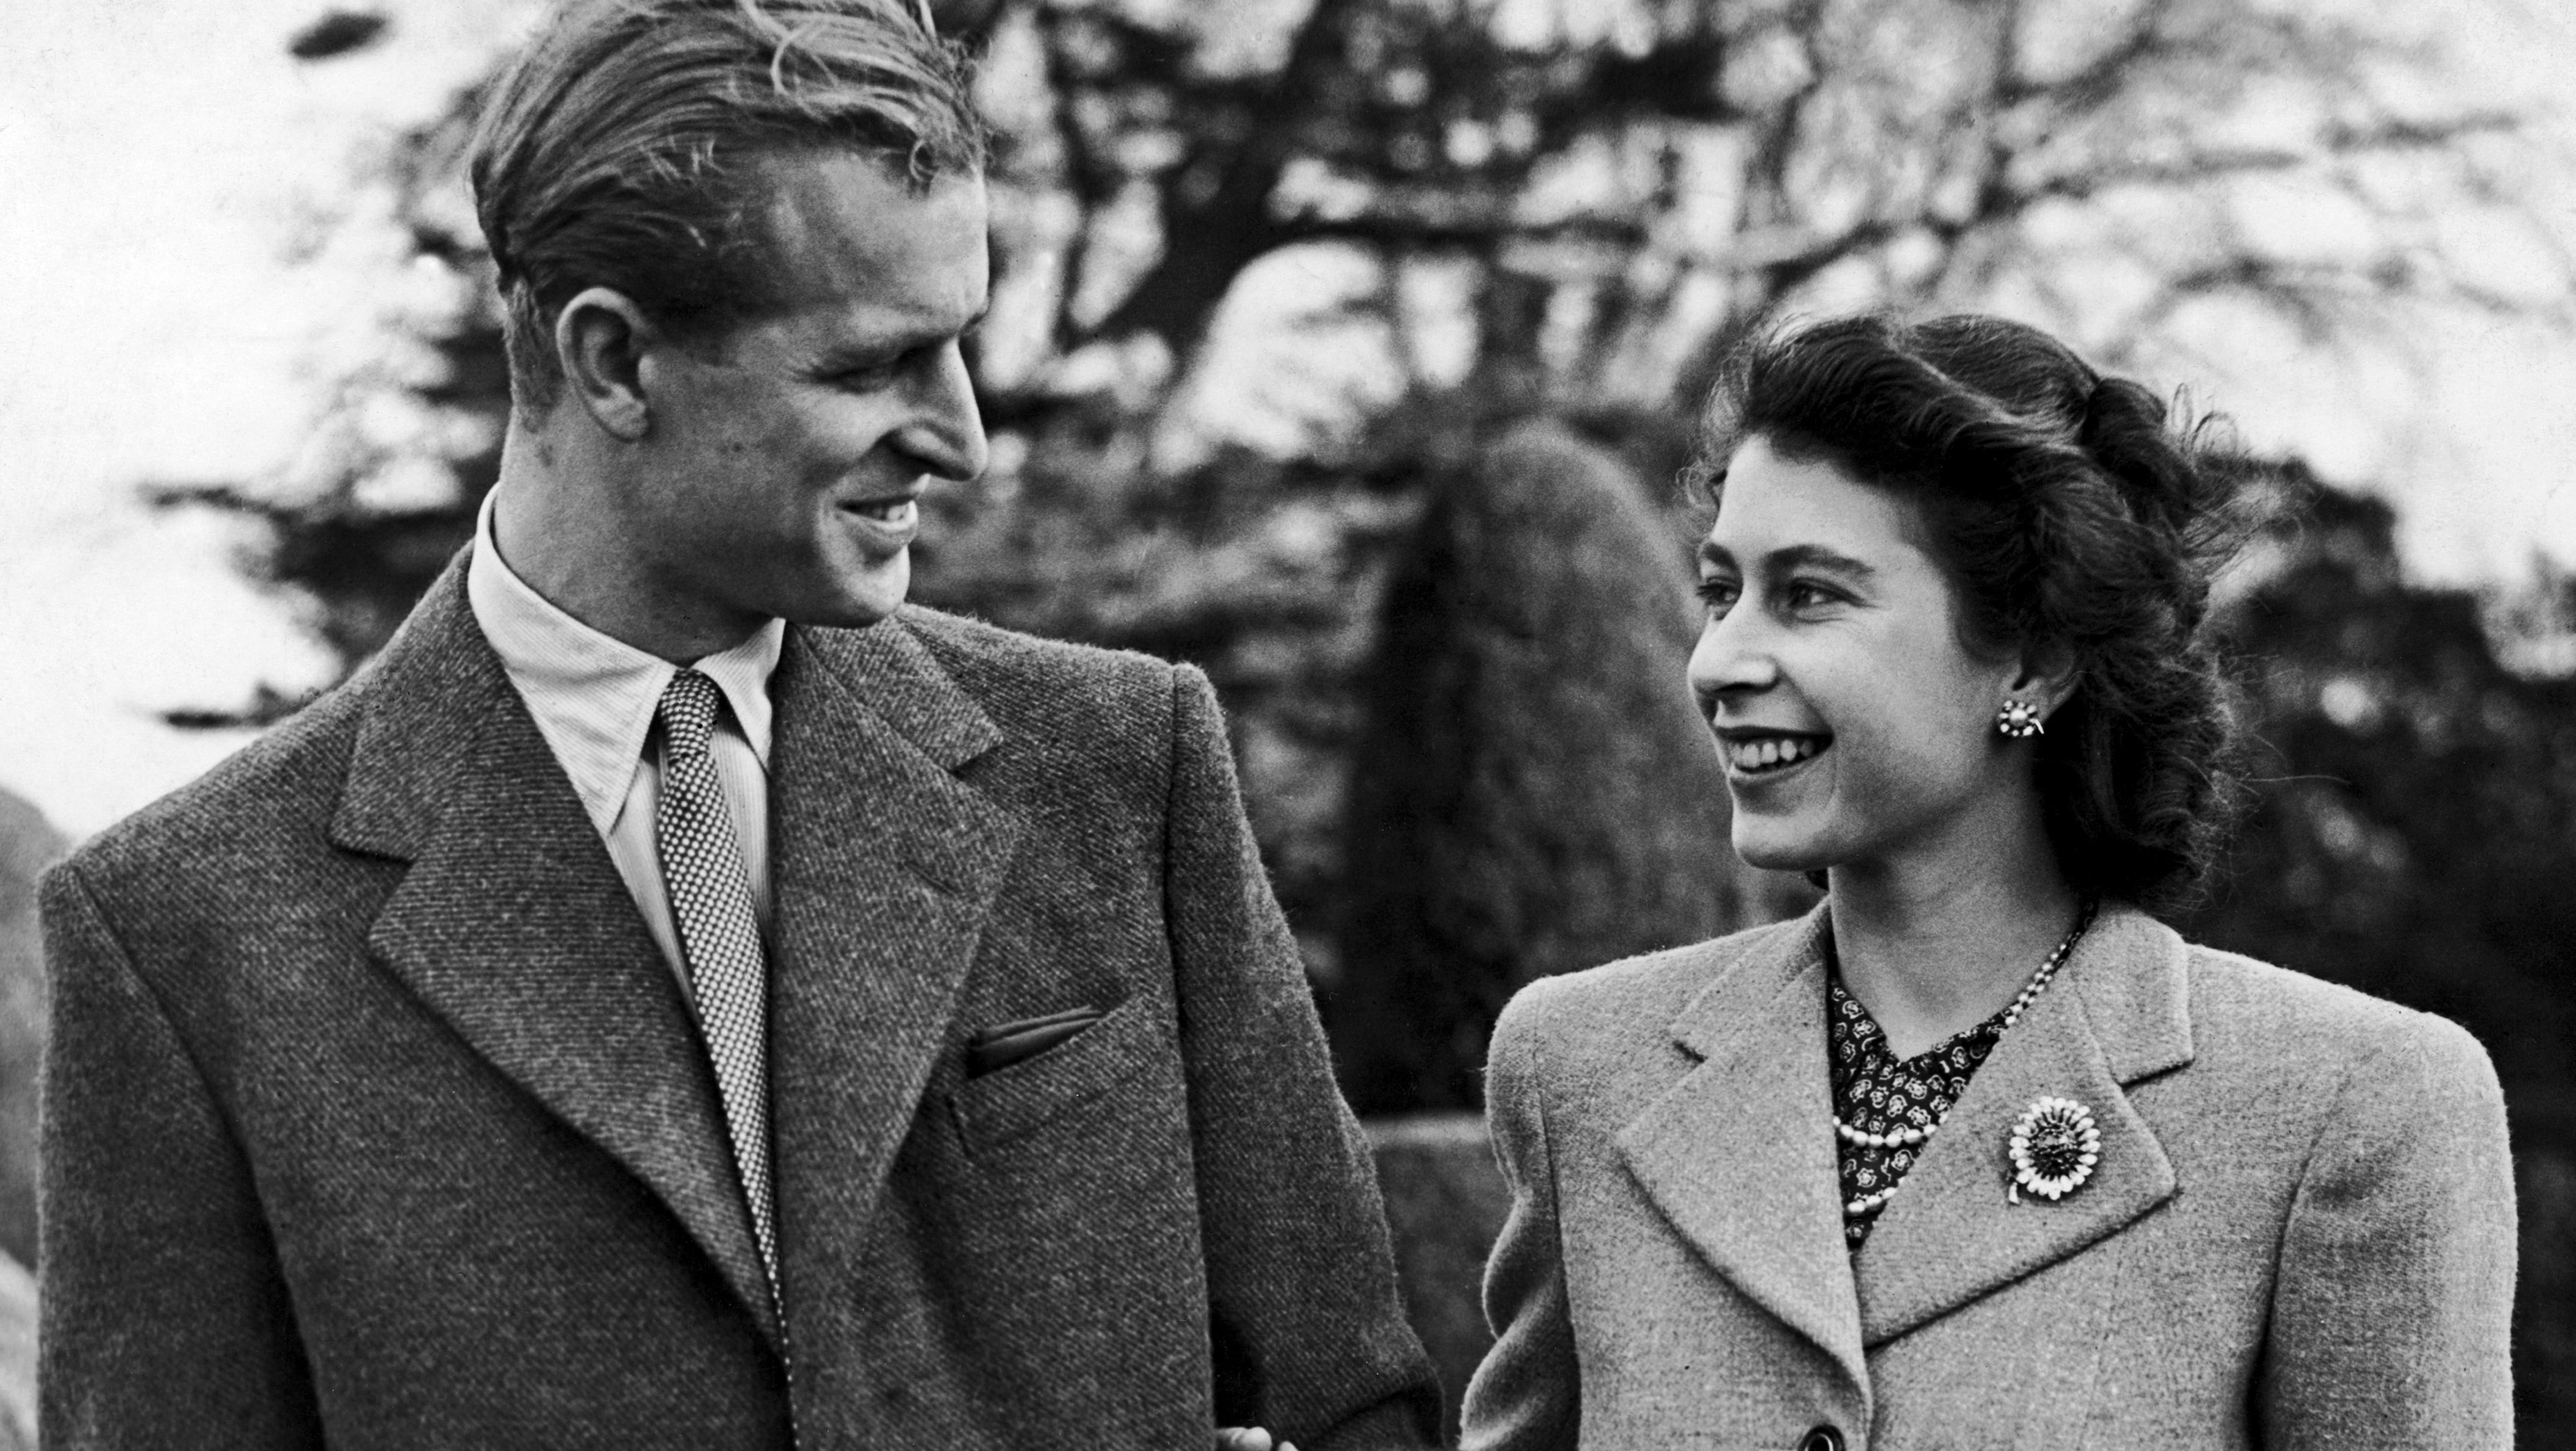 Princess Elizabeth and the Duke of Edinburgh arm in arm. 28th November 1947.